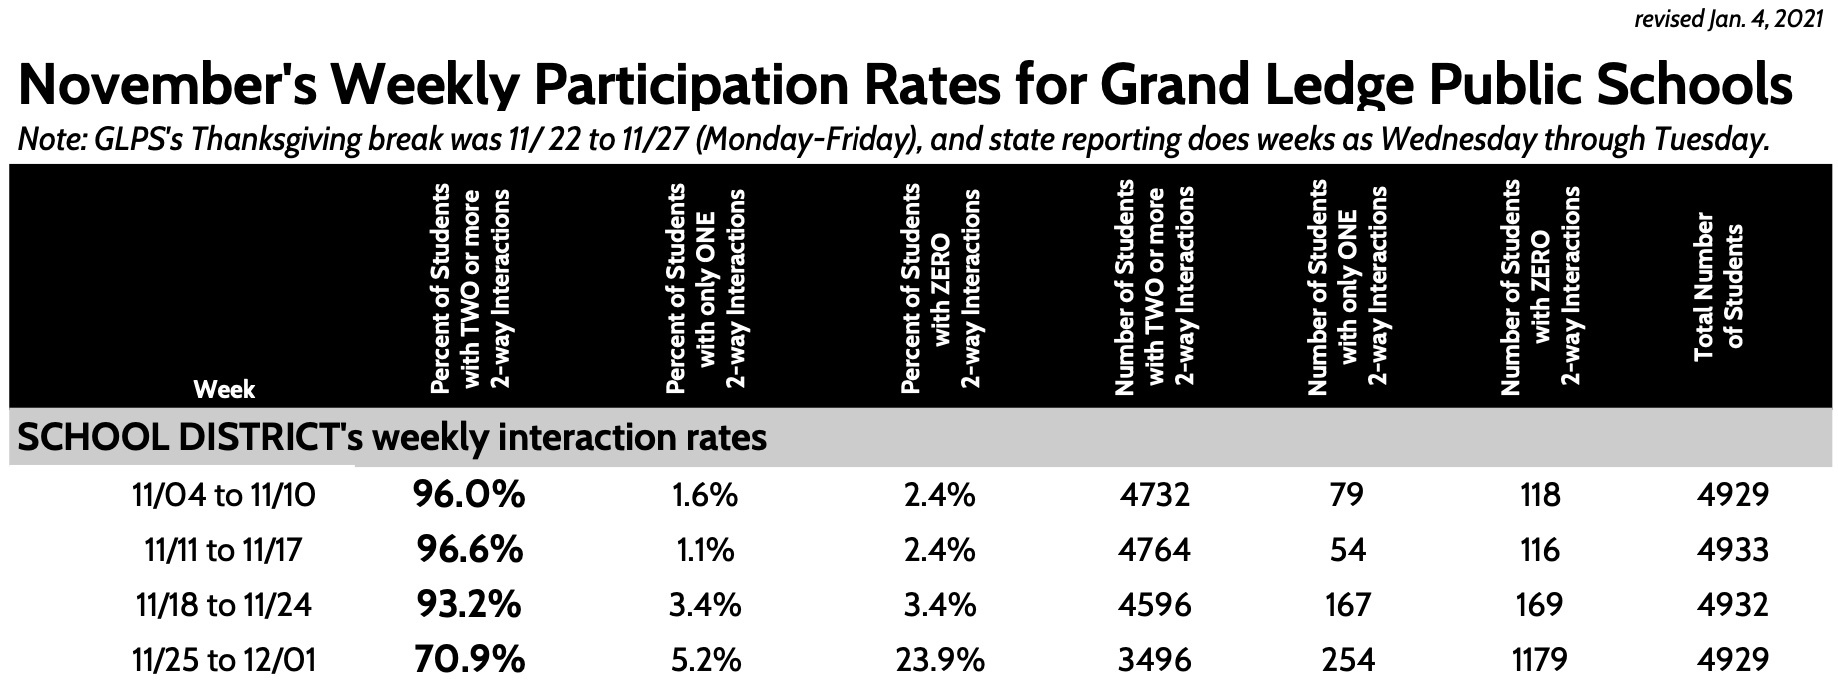 November's Weekly Participation Rates